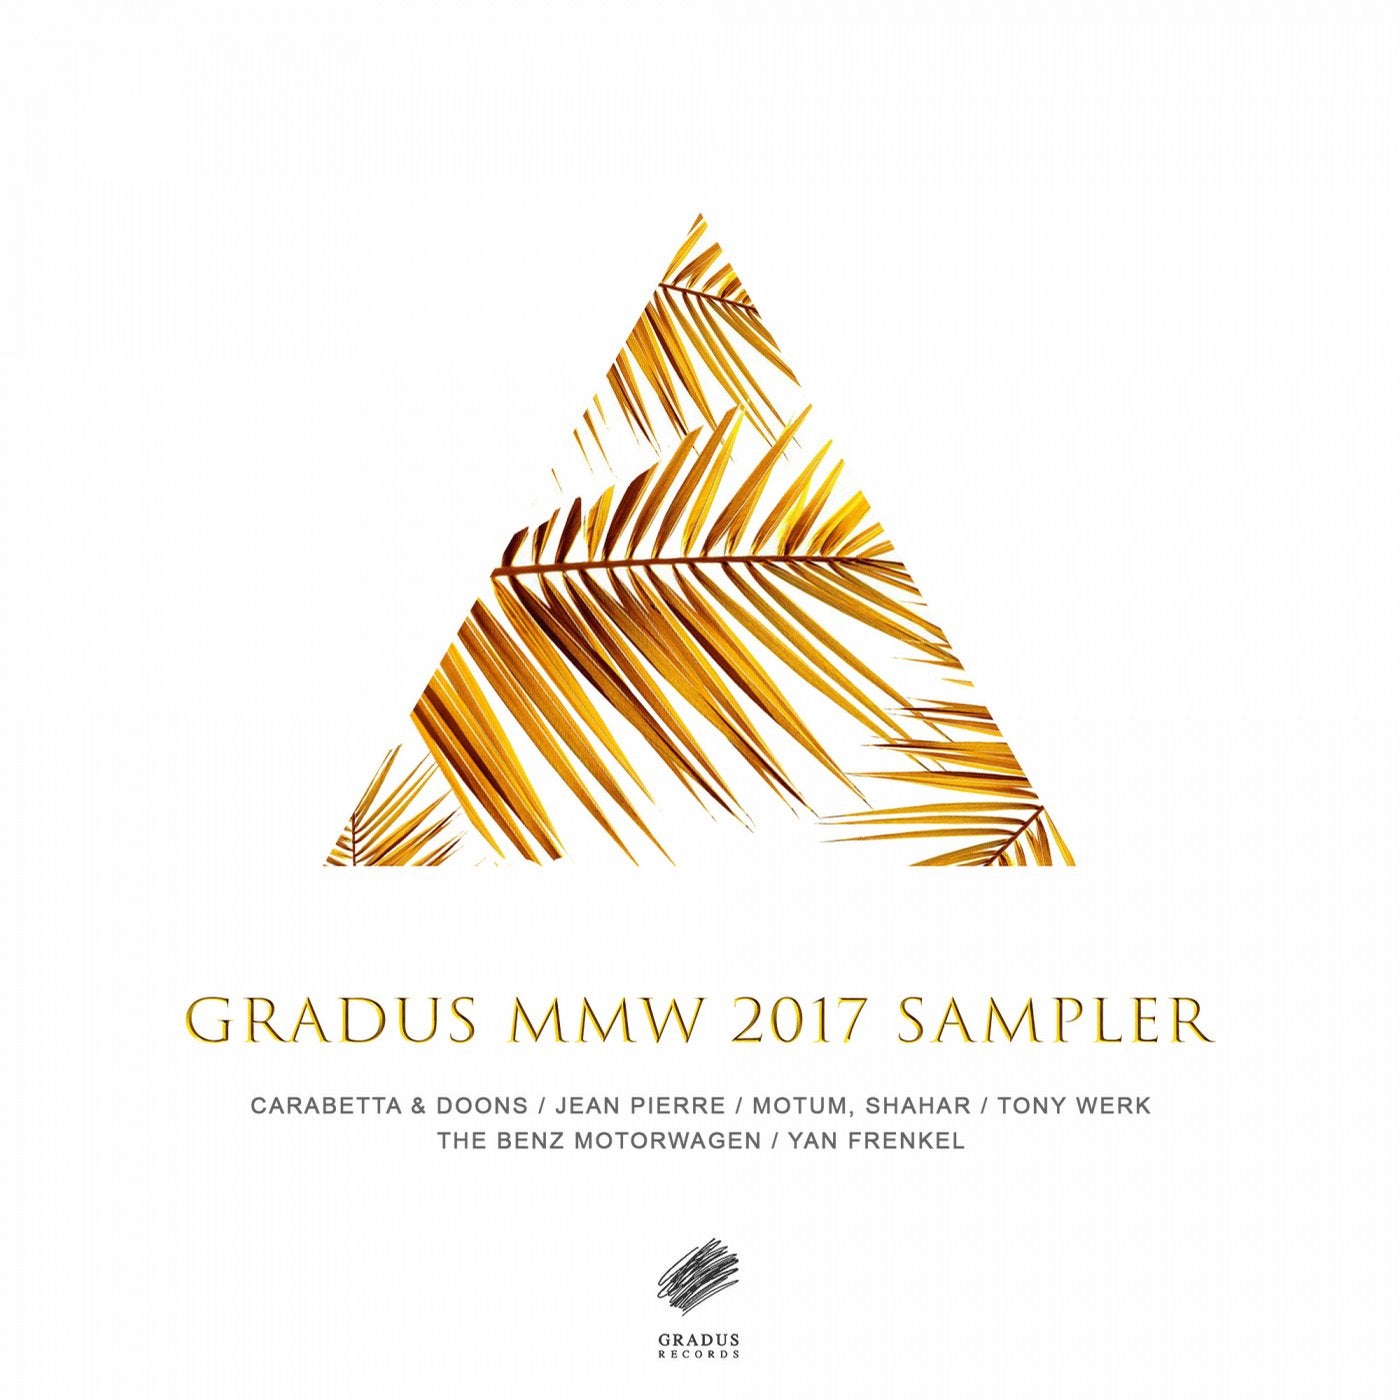 Gradus MMW 2017 Sampler